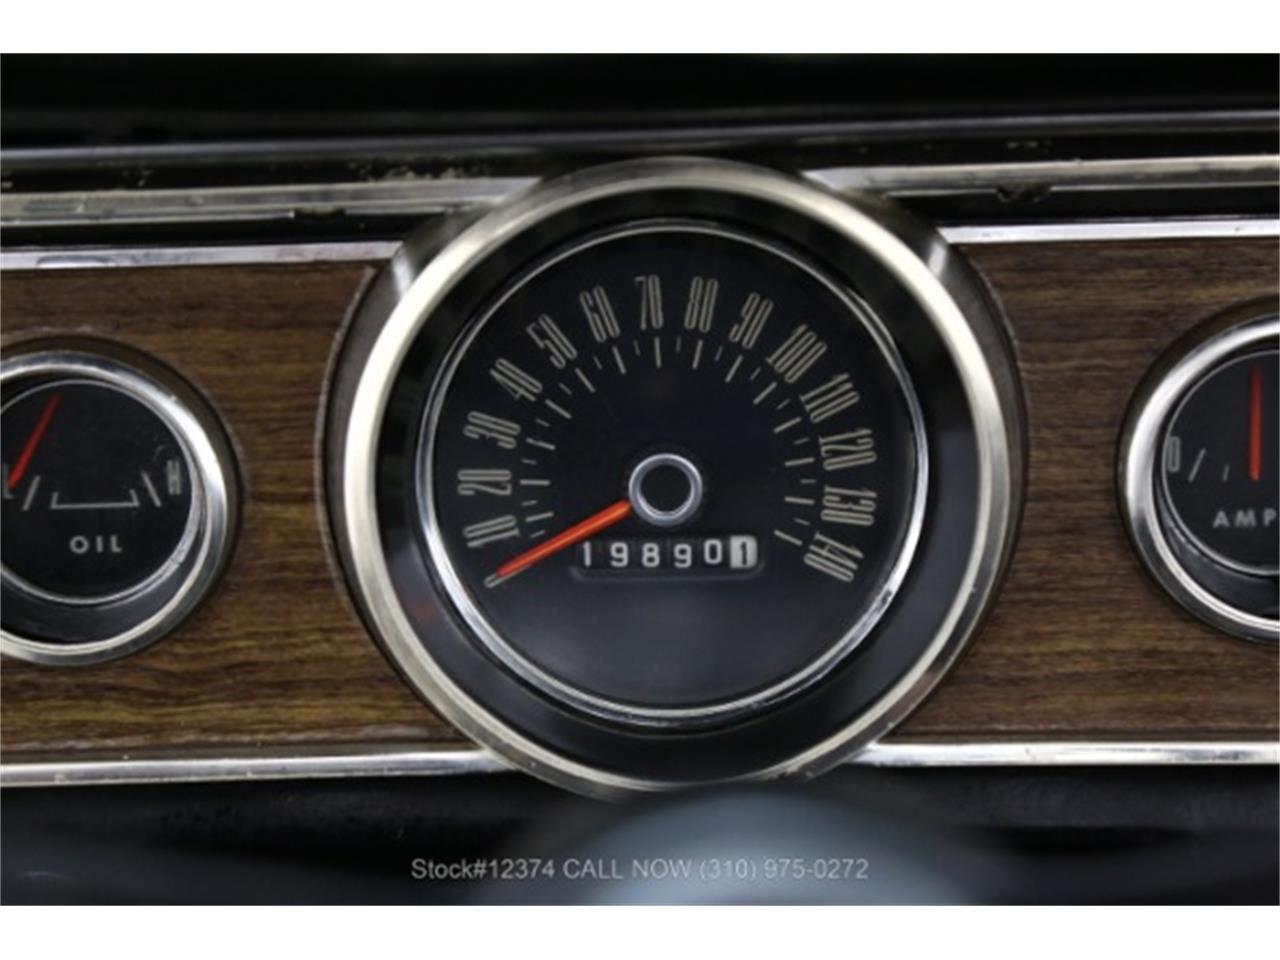 Ford Mustang V8 289 1965 prix tout compris